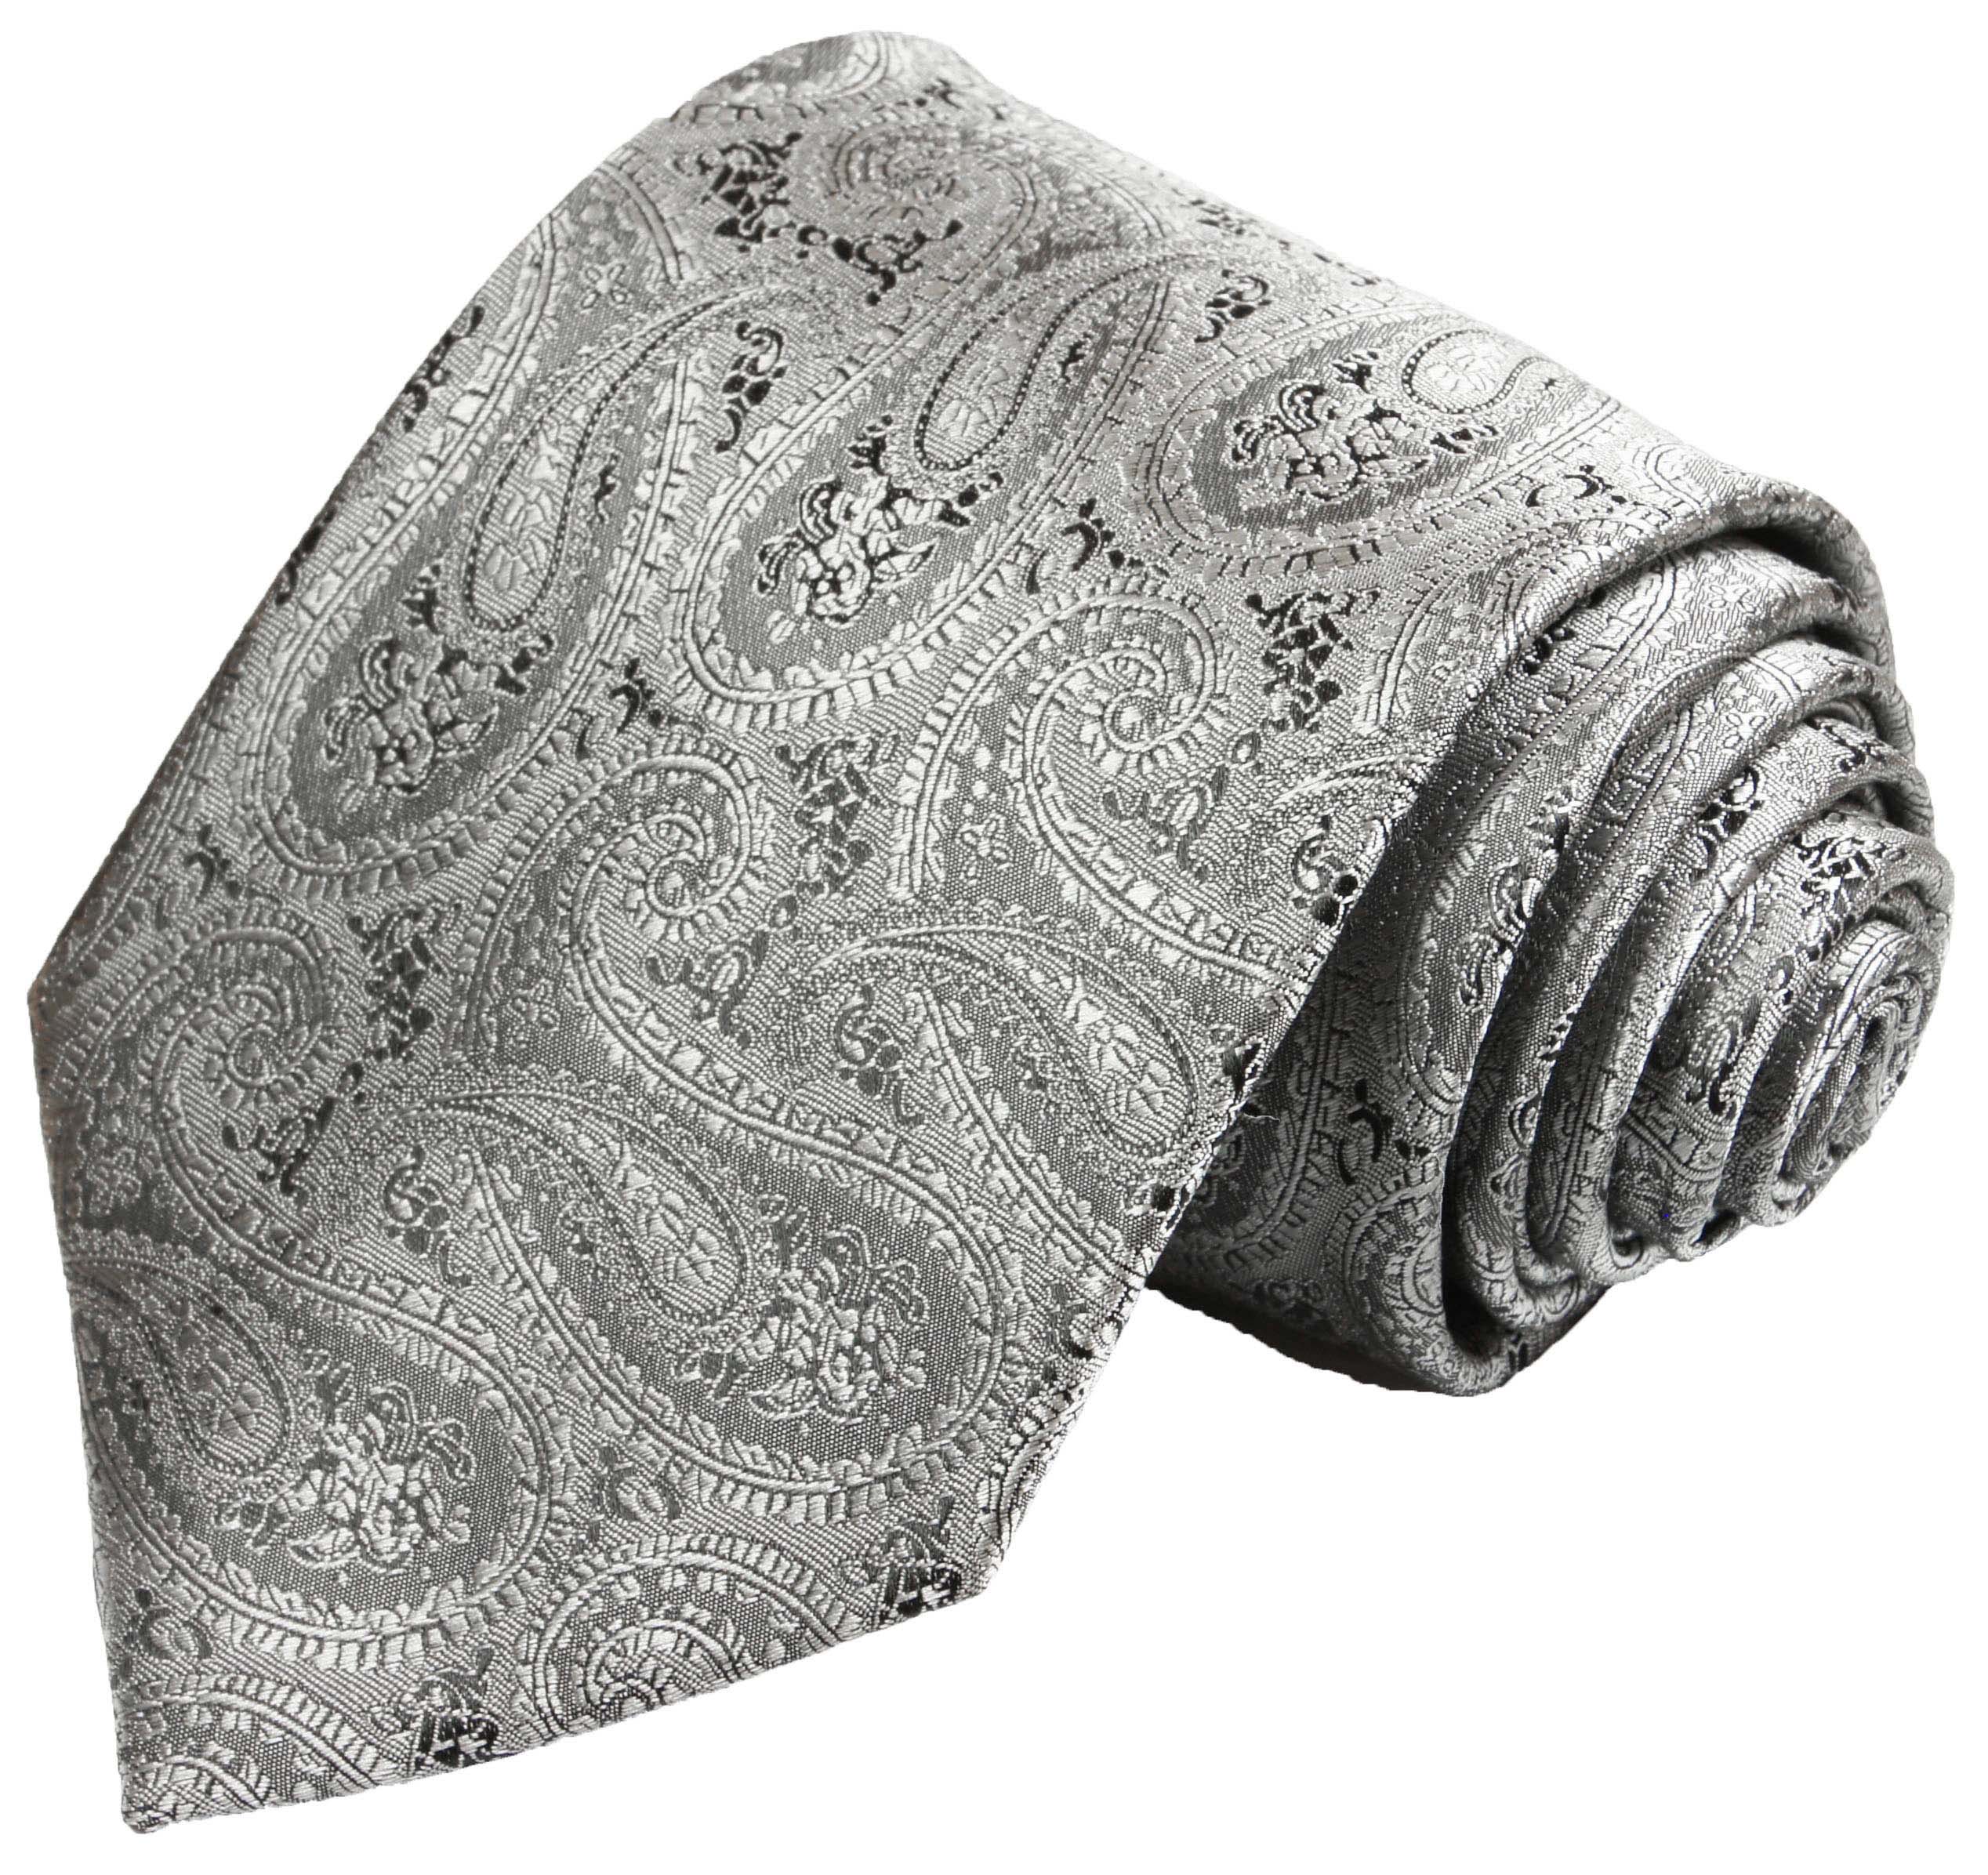 Festliche Weste mit Krawatte silber grau paisley v30 - Paul Malone Shop